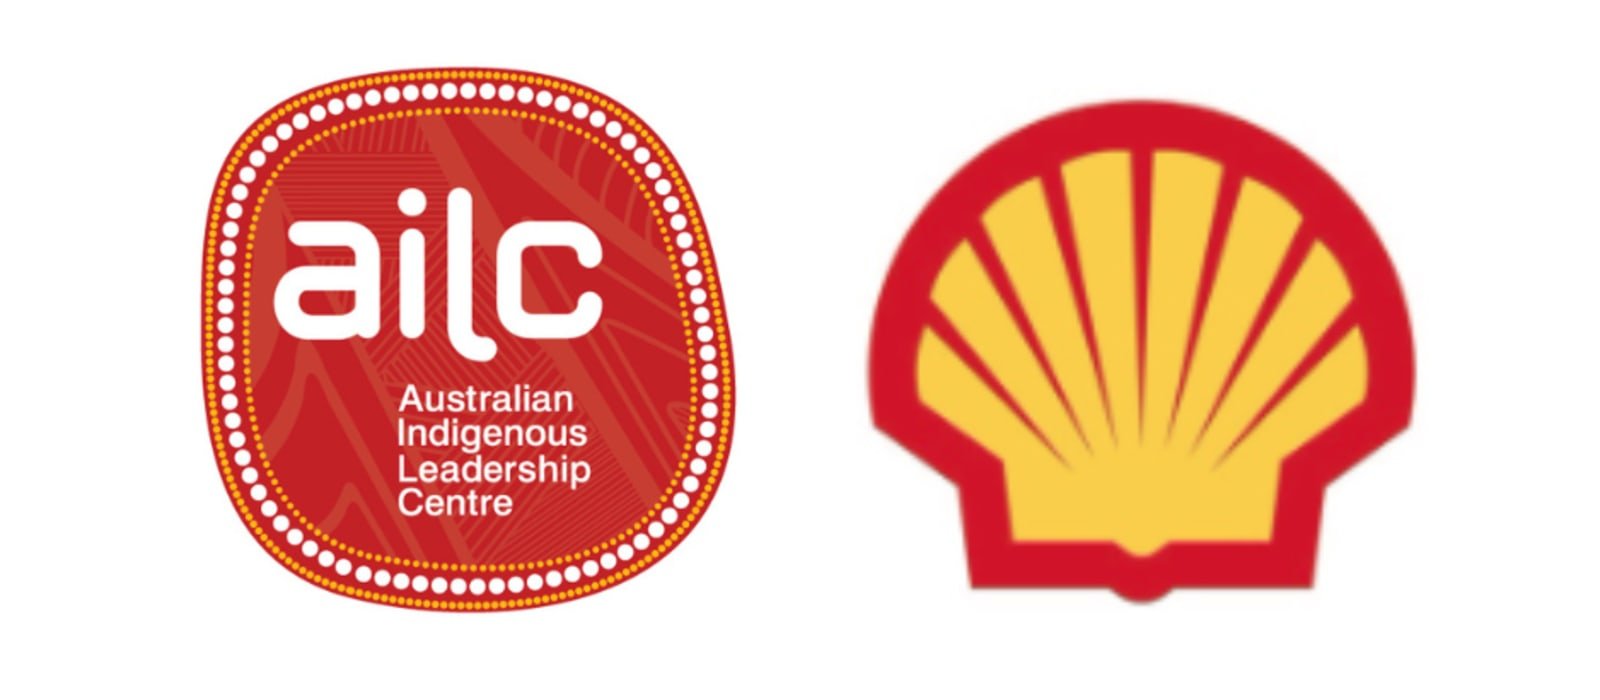 Partnership with Shell Australia